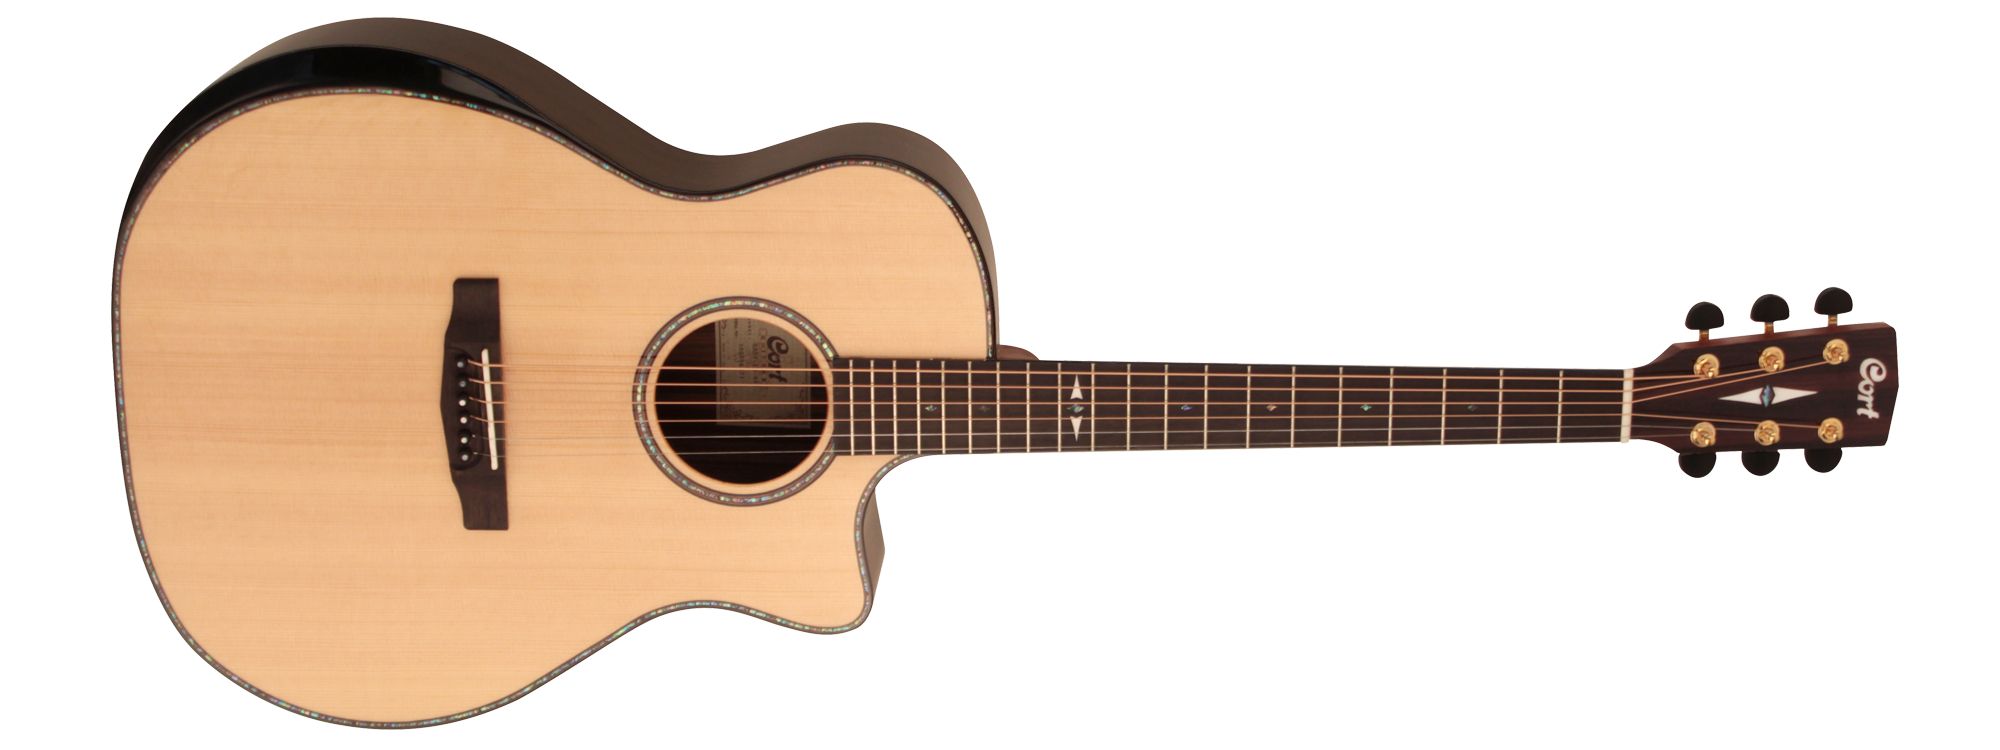 Cort GA PF Bevel Natural, Electro Acoustic Guitar for sale at Richards Guitars.